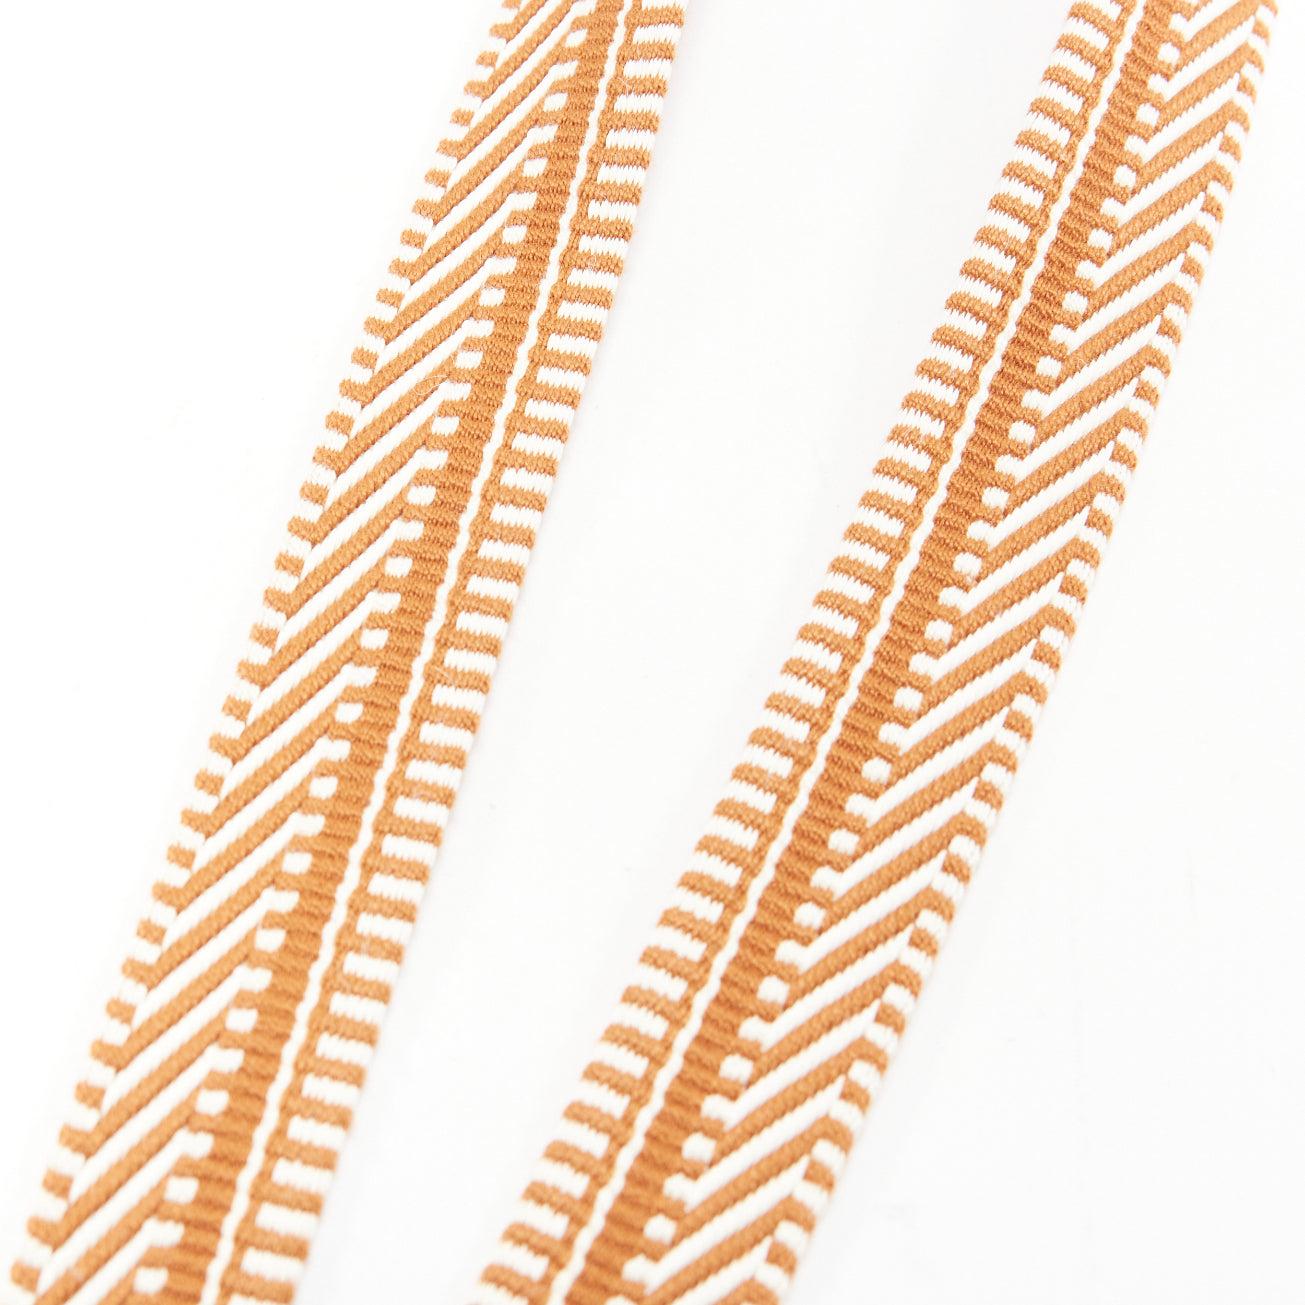 HERMES Sangle 25 brown chevron stripes woven fabric gold hardware bag strap For Sale 1